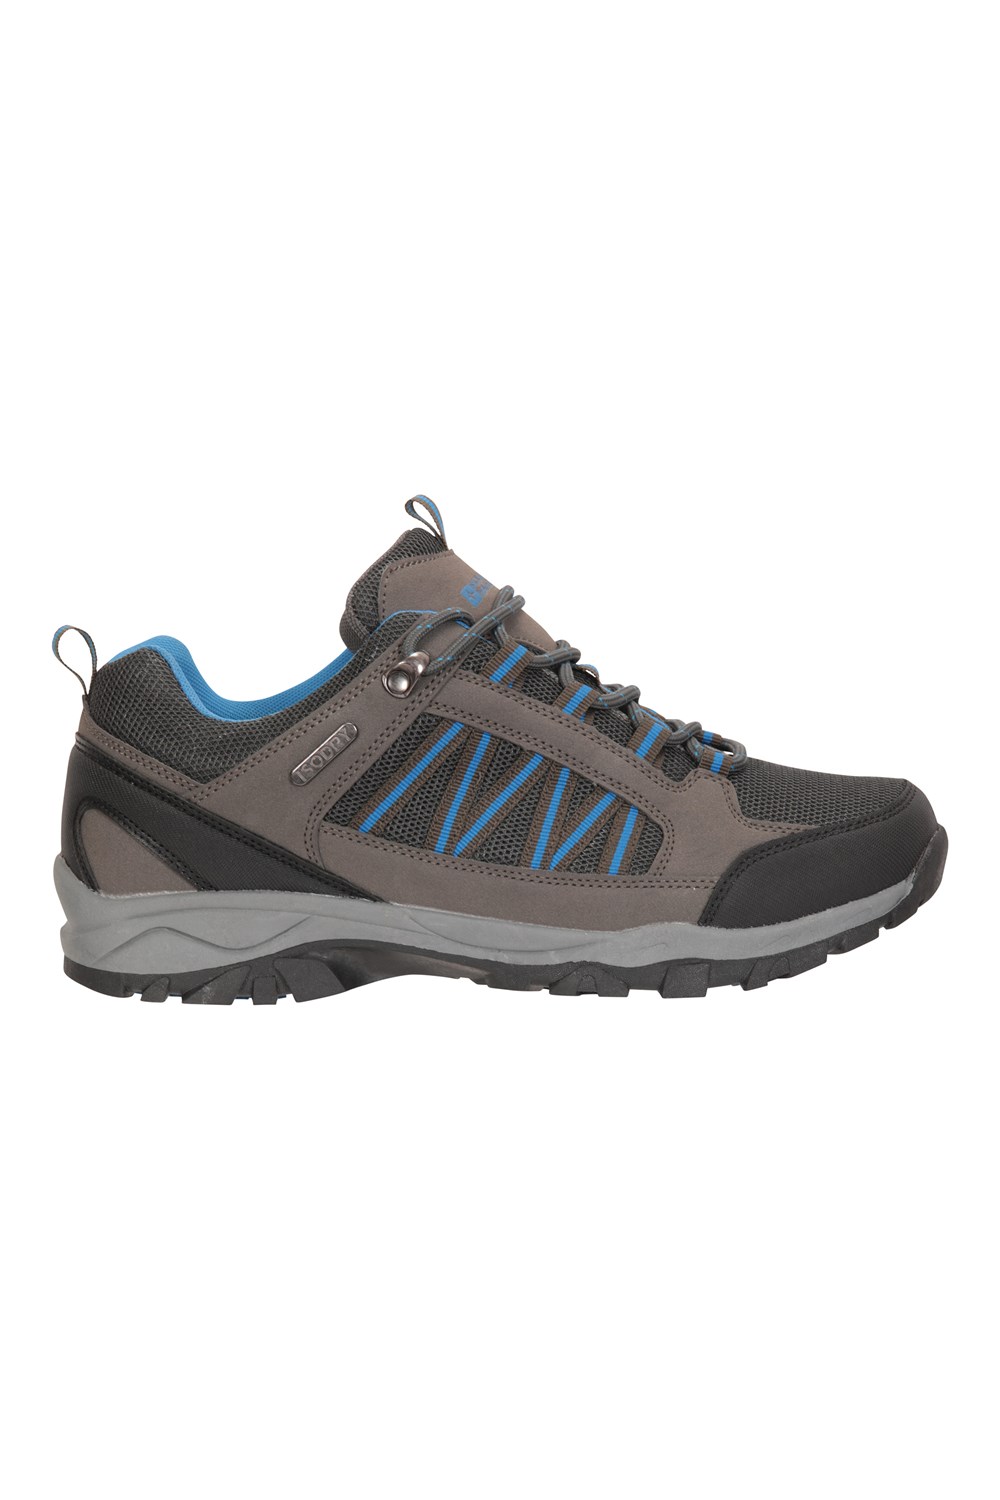 Mountain Warehouse Mens Path Waterproof Walking Shoes Breathable Hiking ...